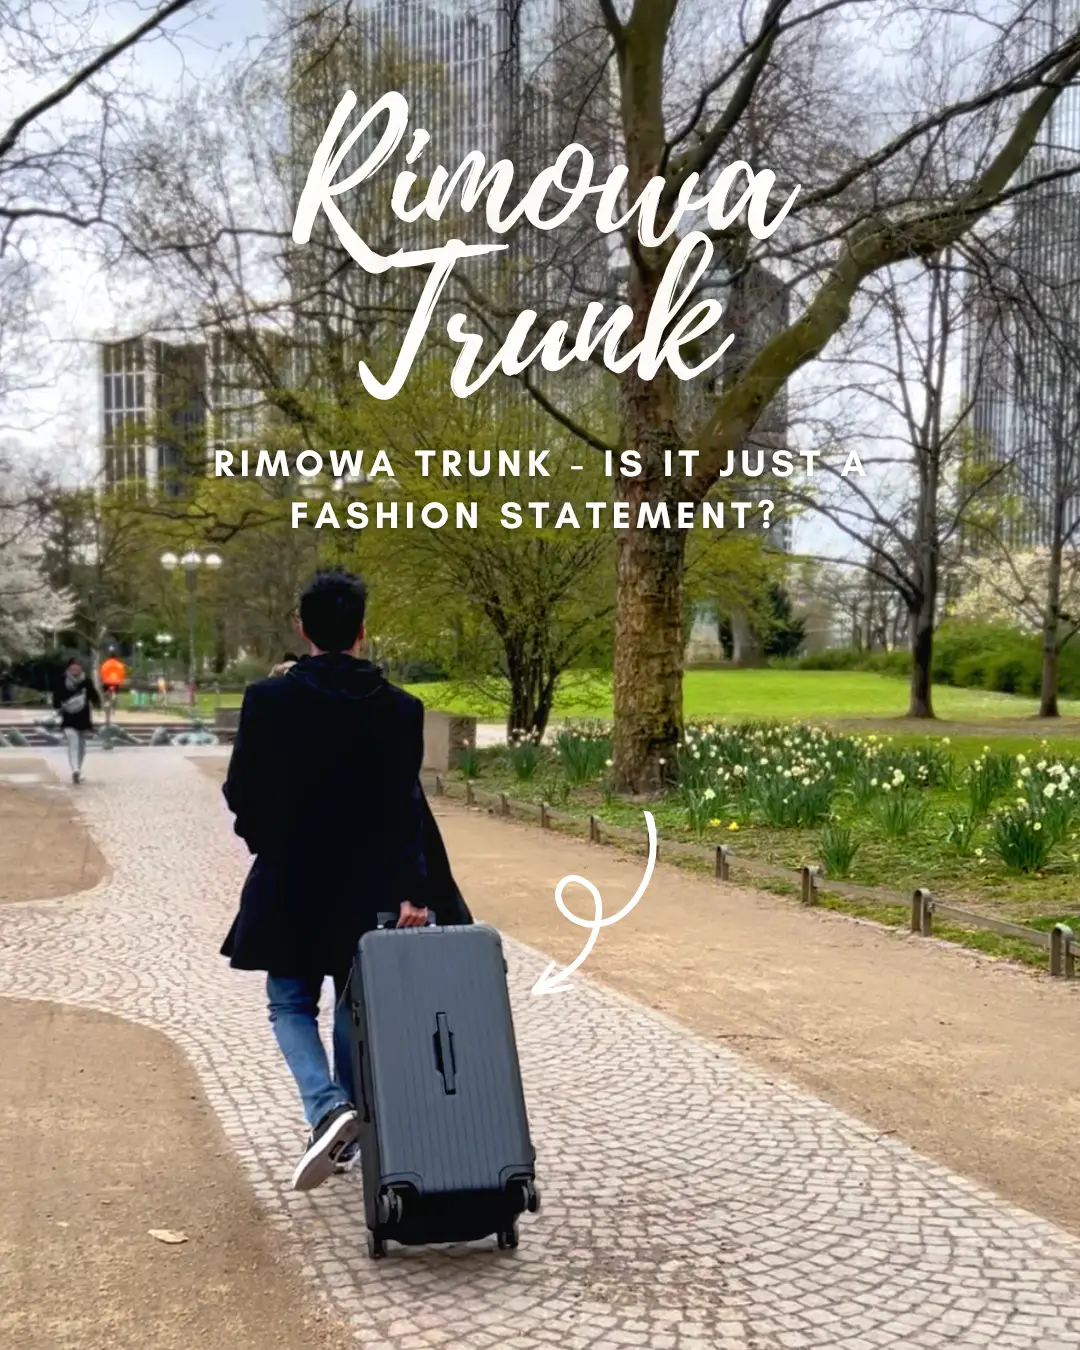 Rimowa trunk - is it just a fashion statement?